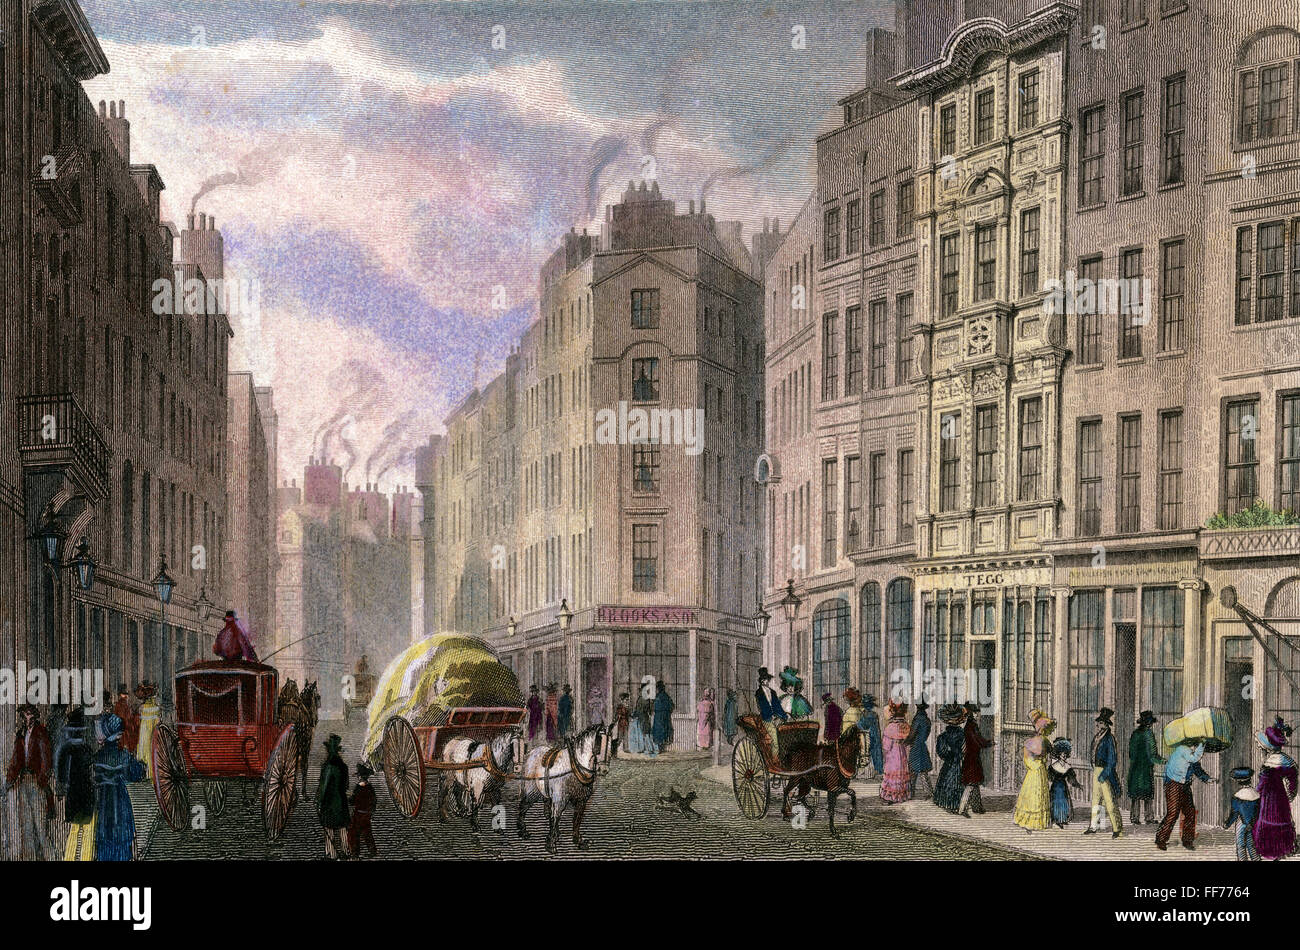 LONDON: STREET SCENE. /nColored engraving, 19th century. Stock Photo